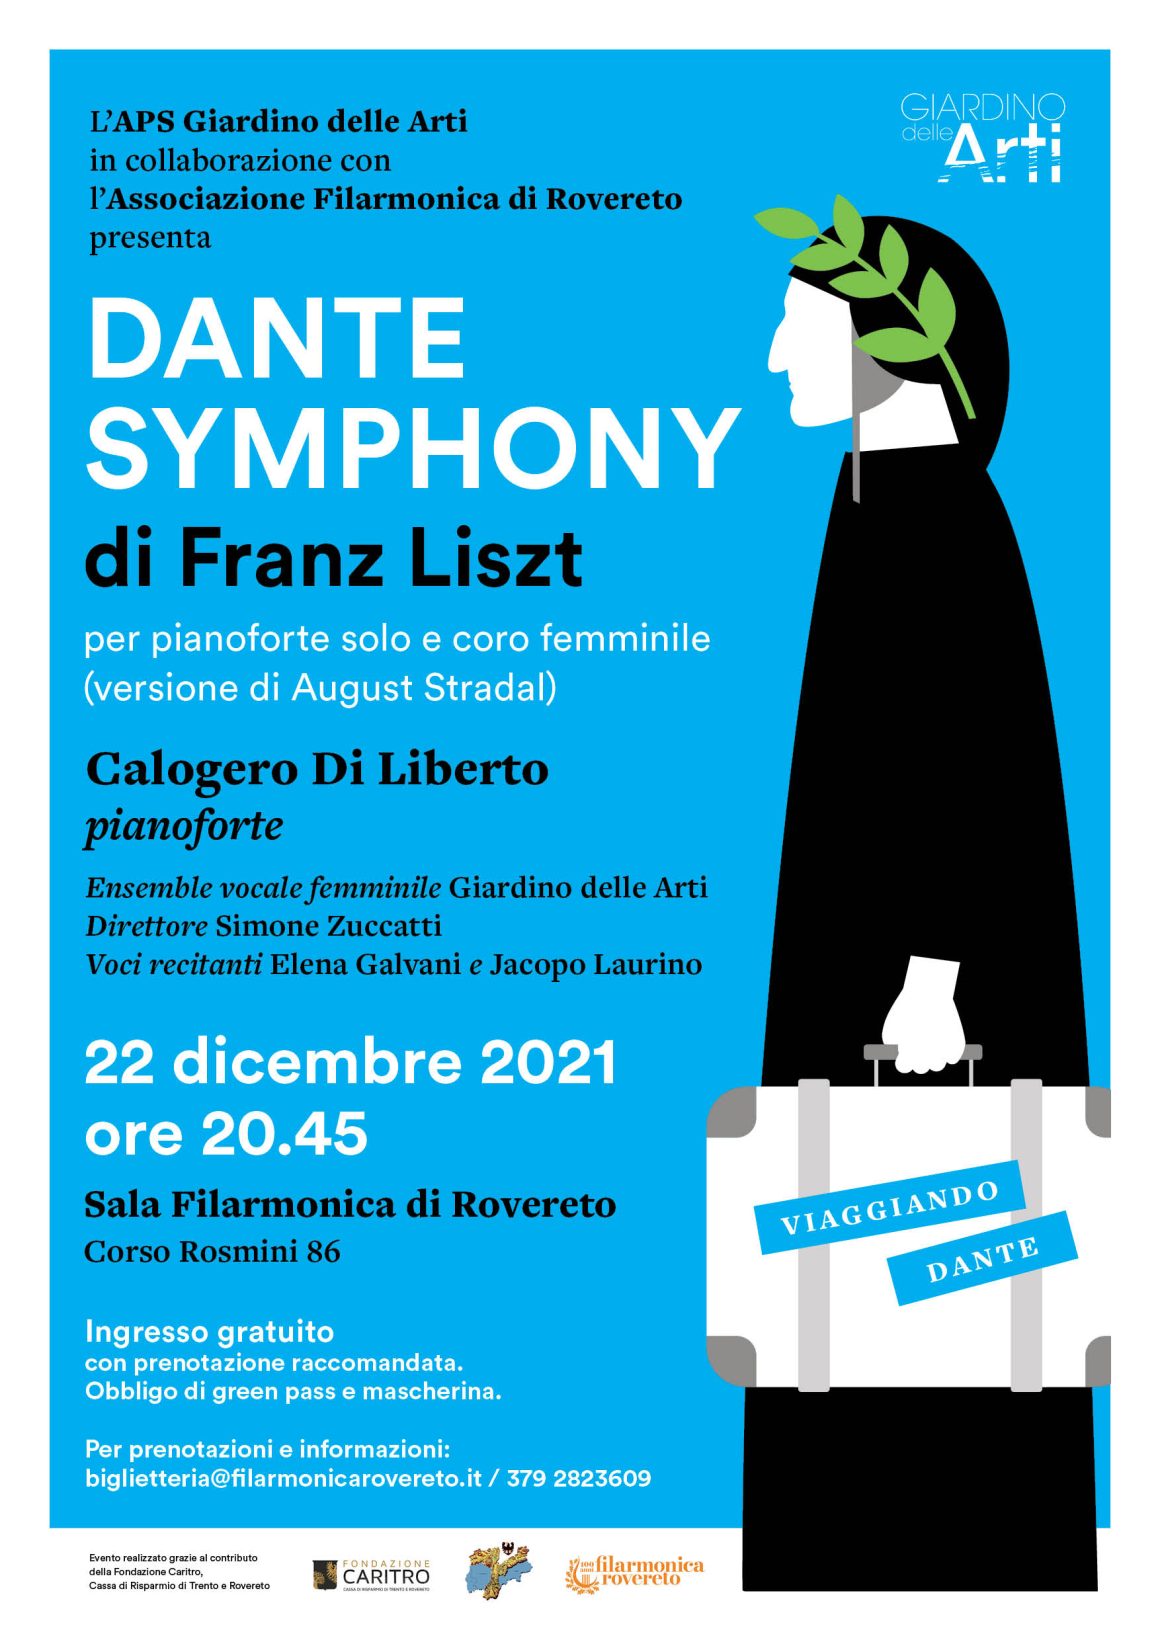 Dante Symphony di Franz Liszt